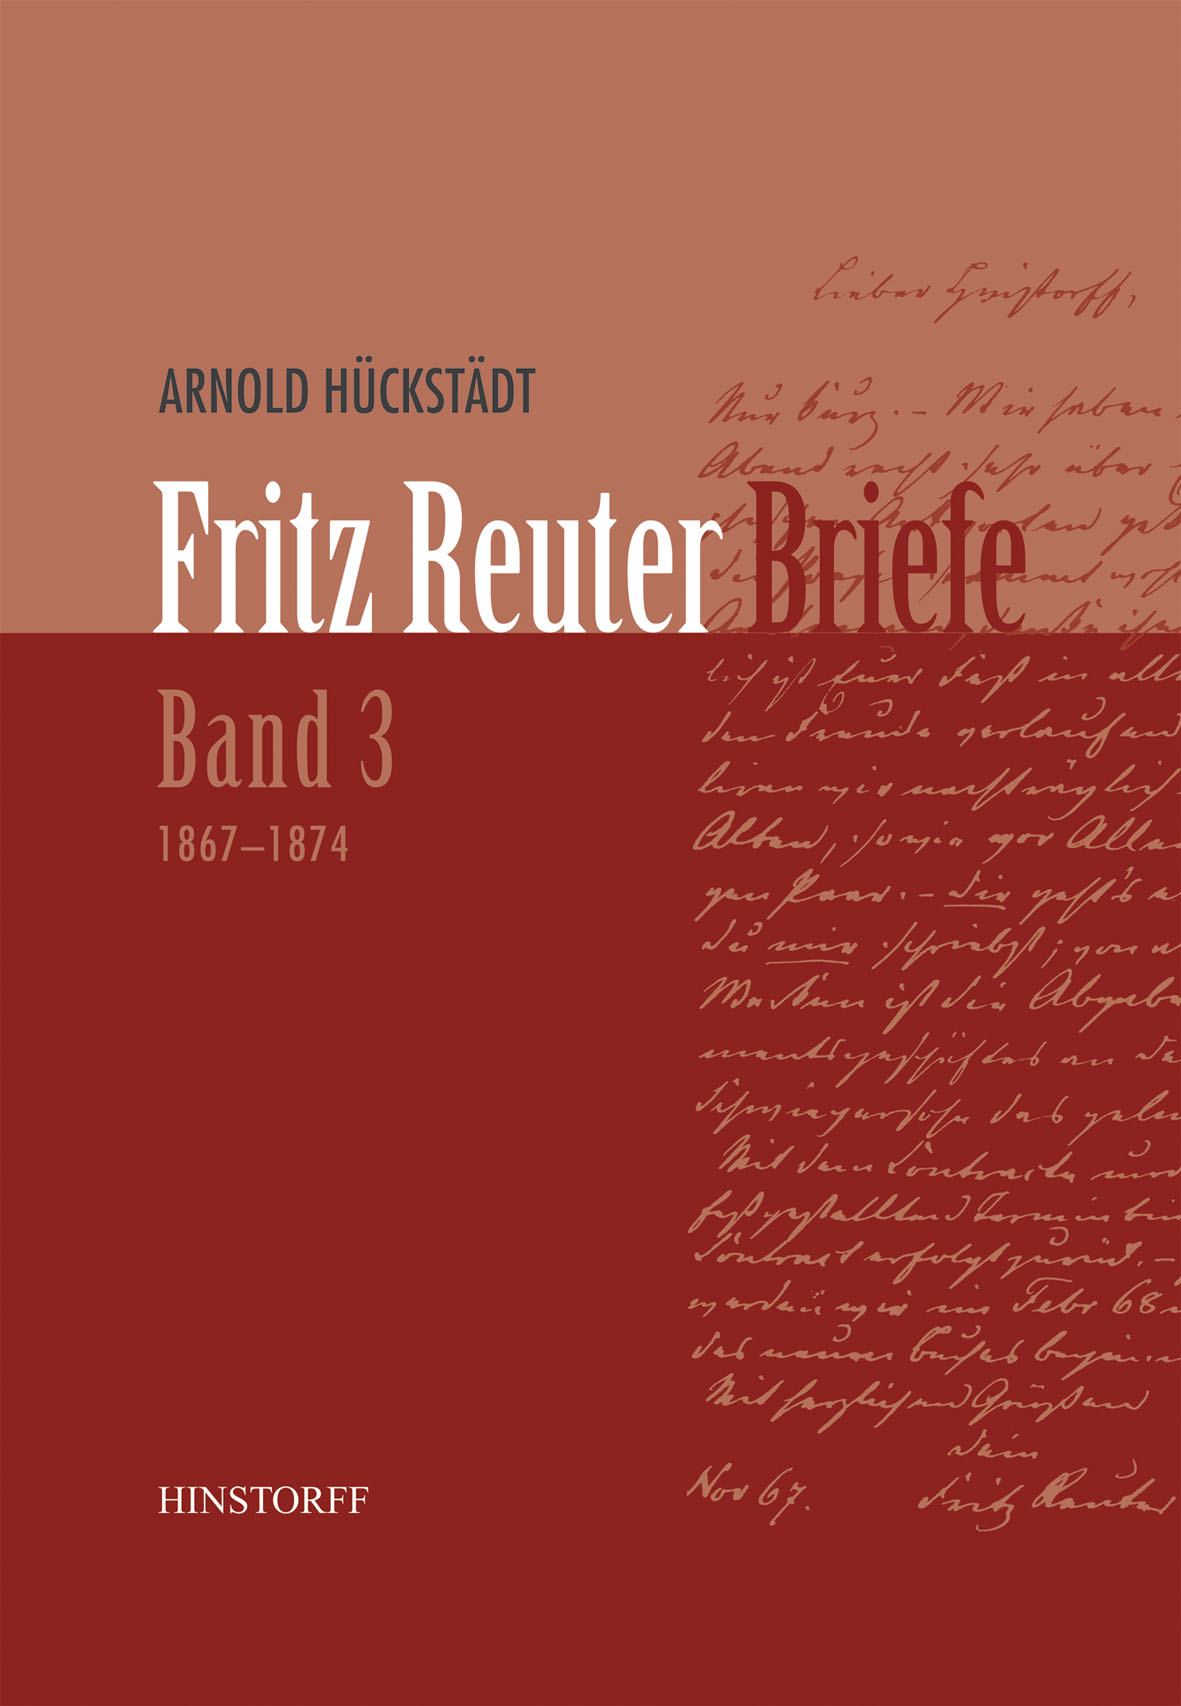 Fritz Reuter Briefe Band 3 (1867-1874)